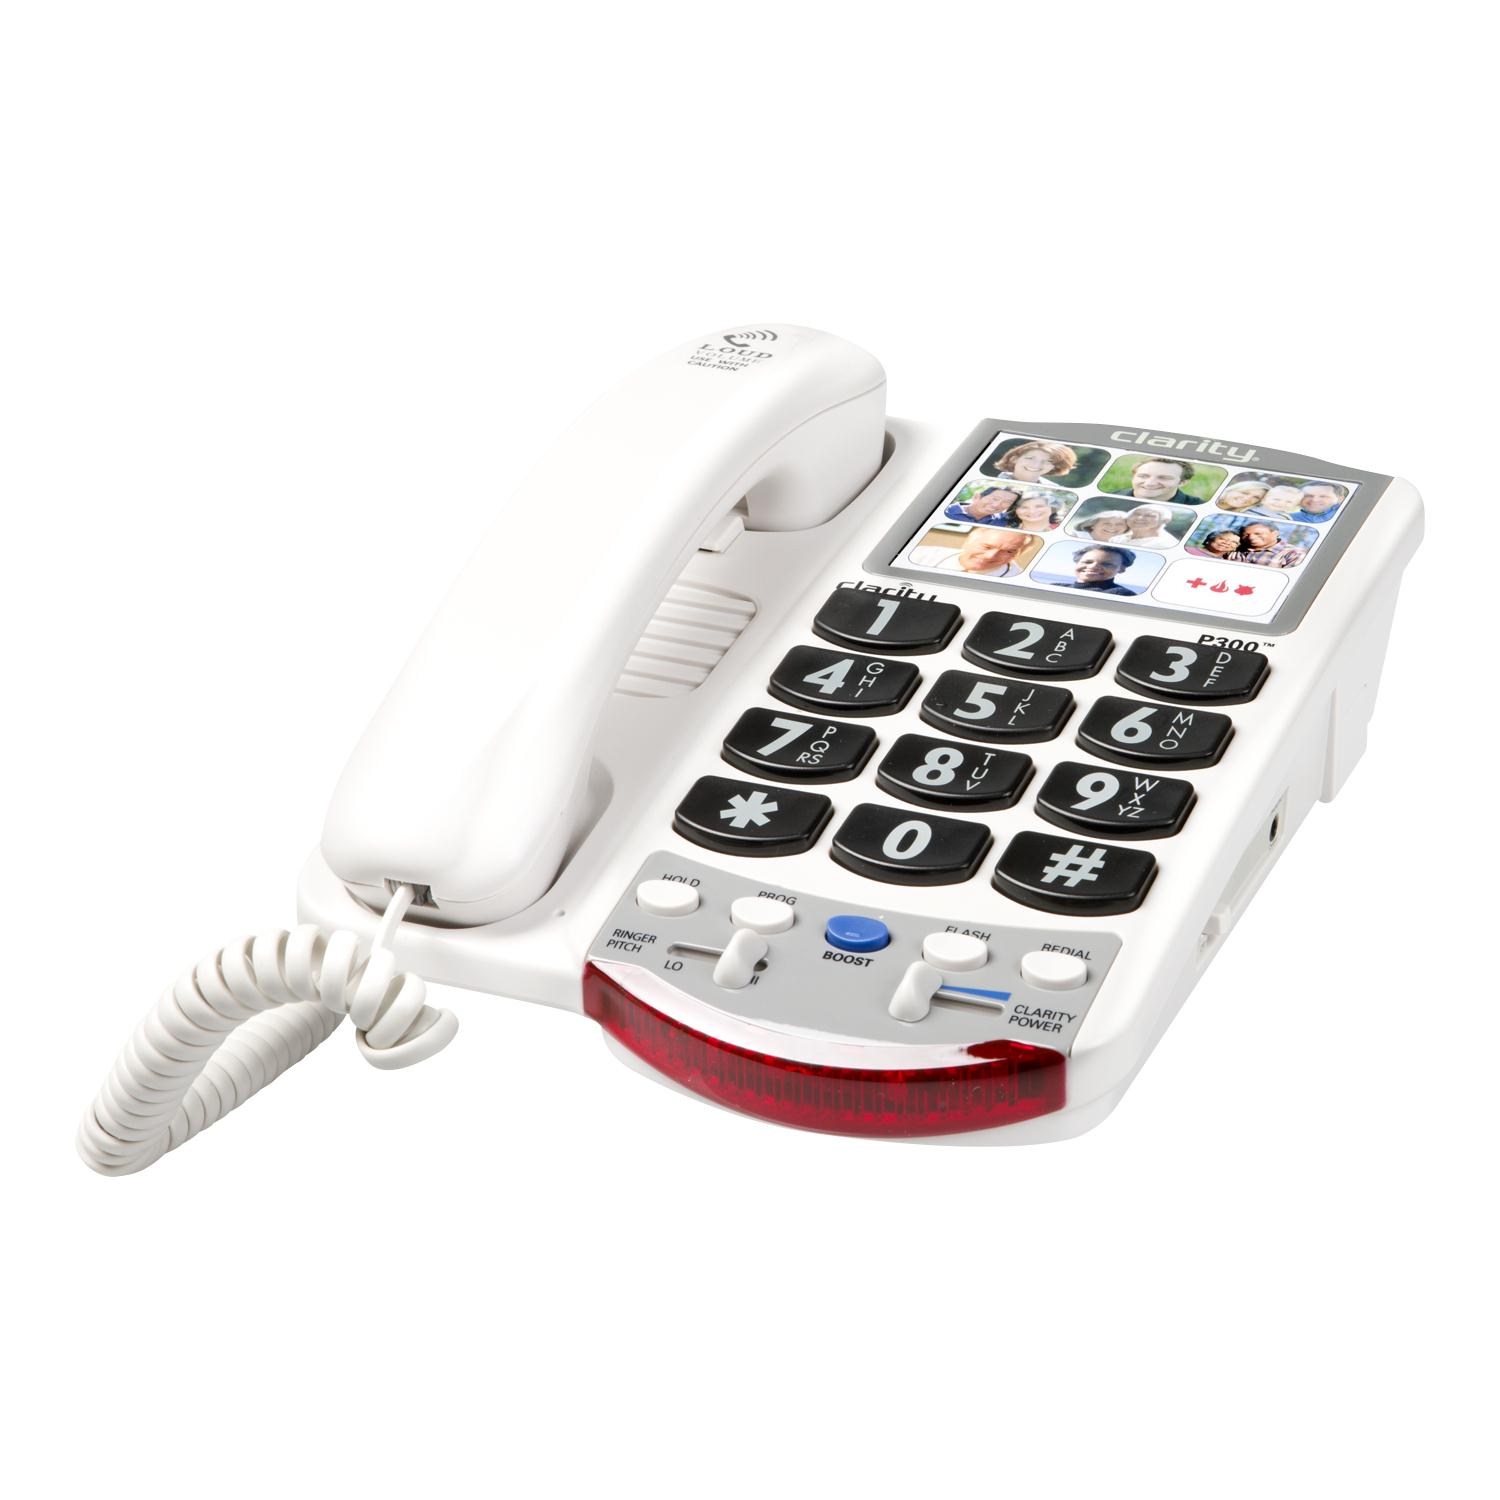 Clarity P300 Handset Landline Telephone 